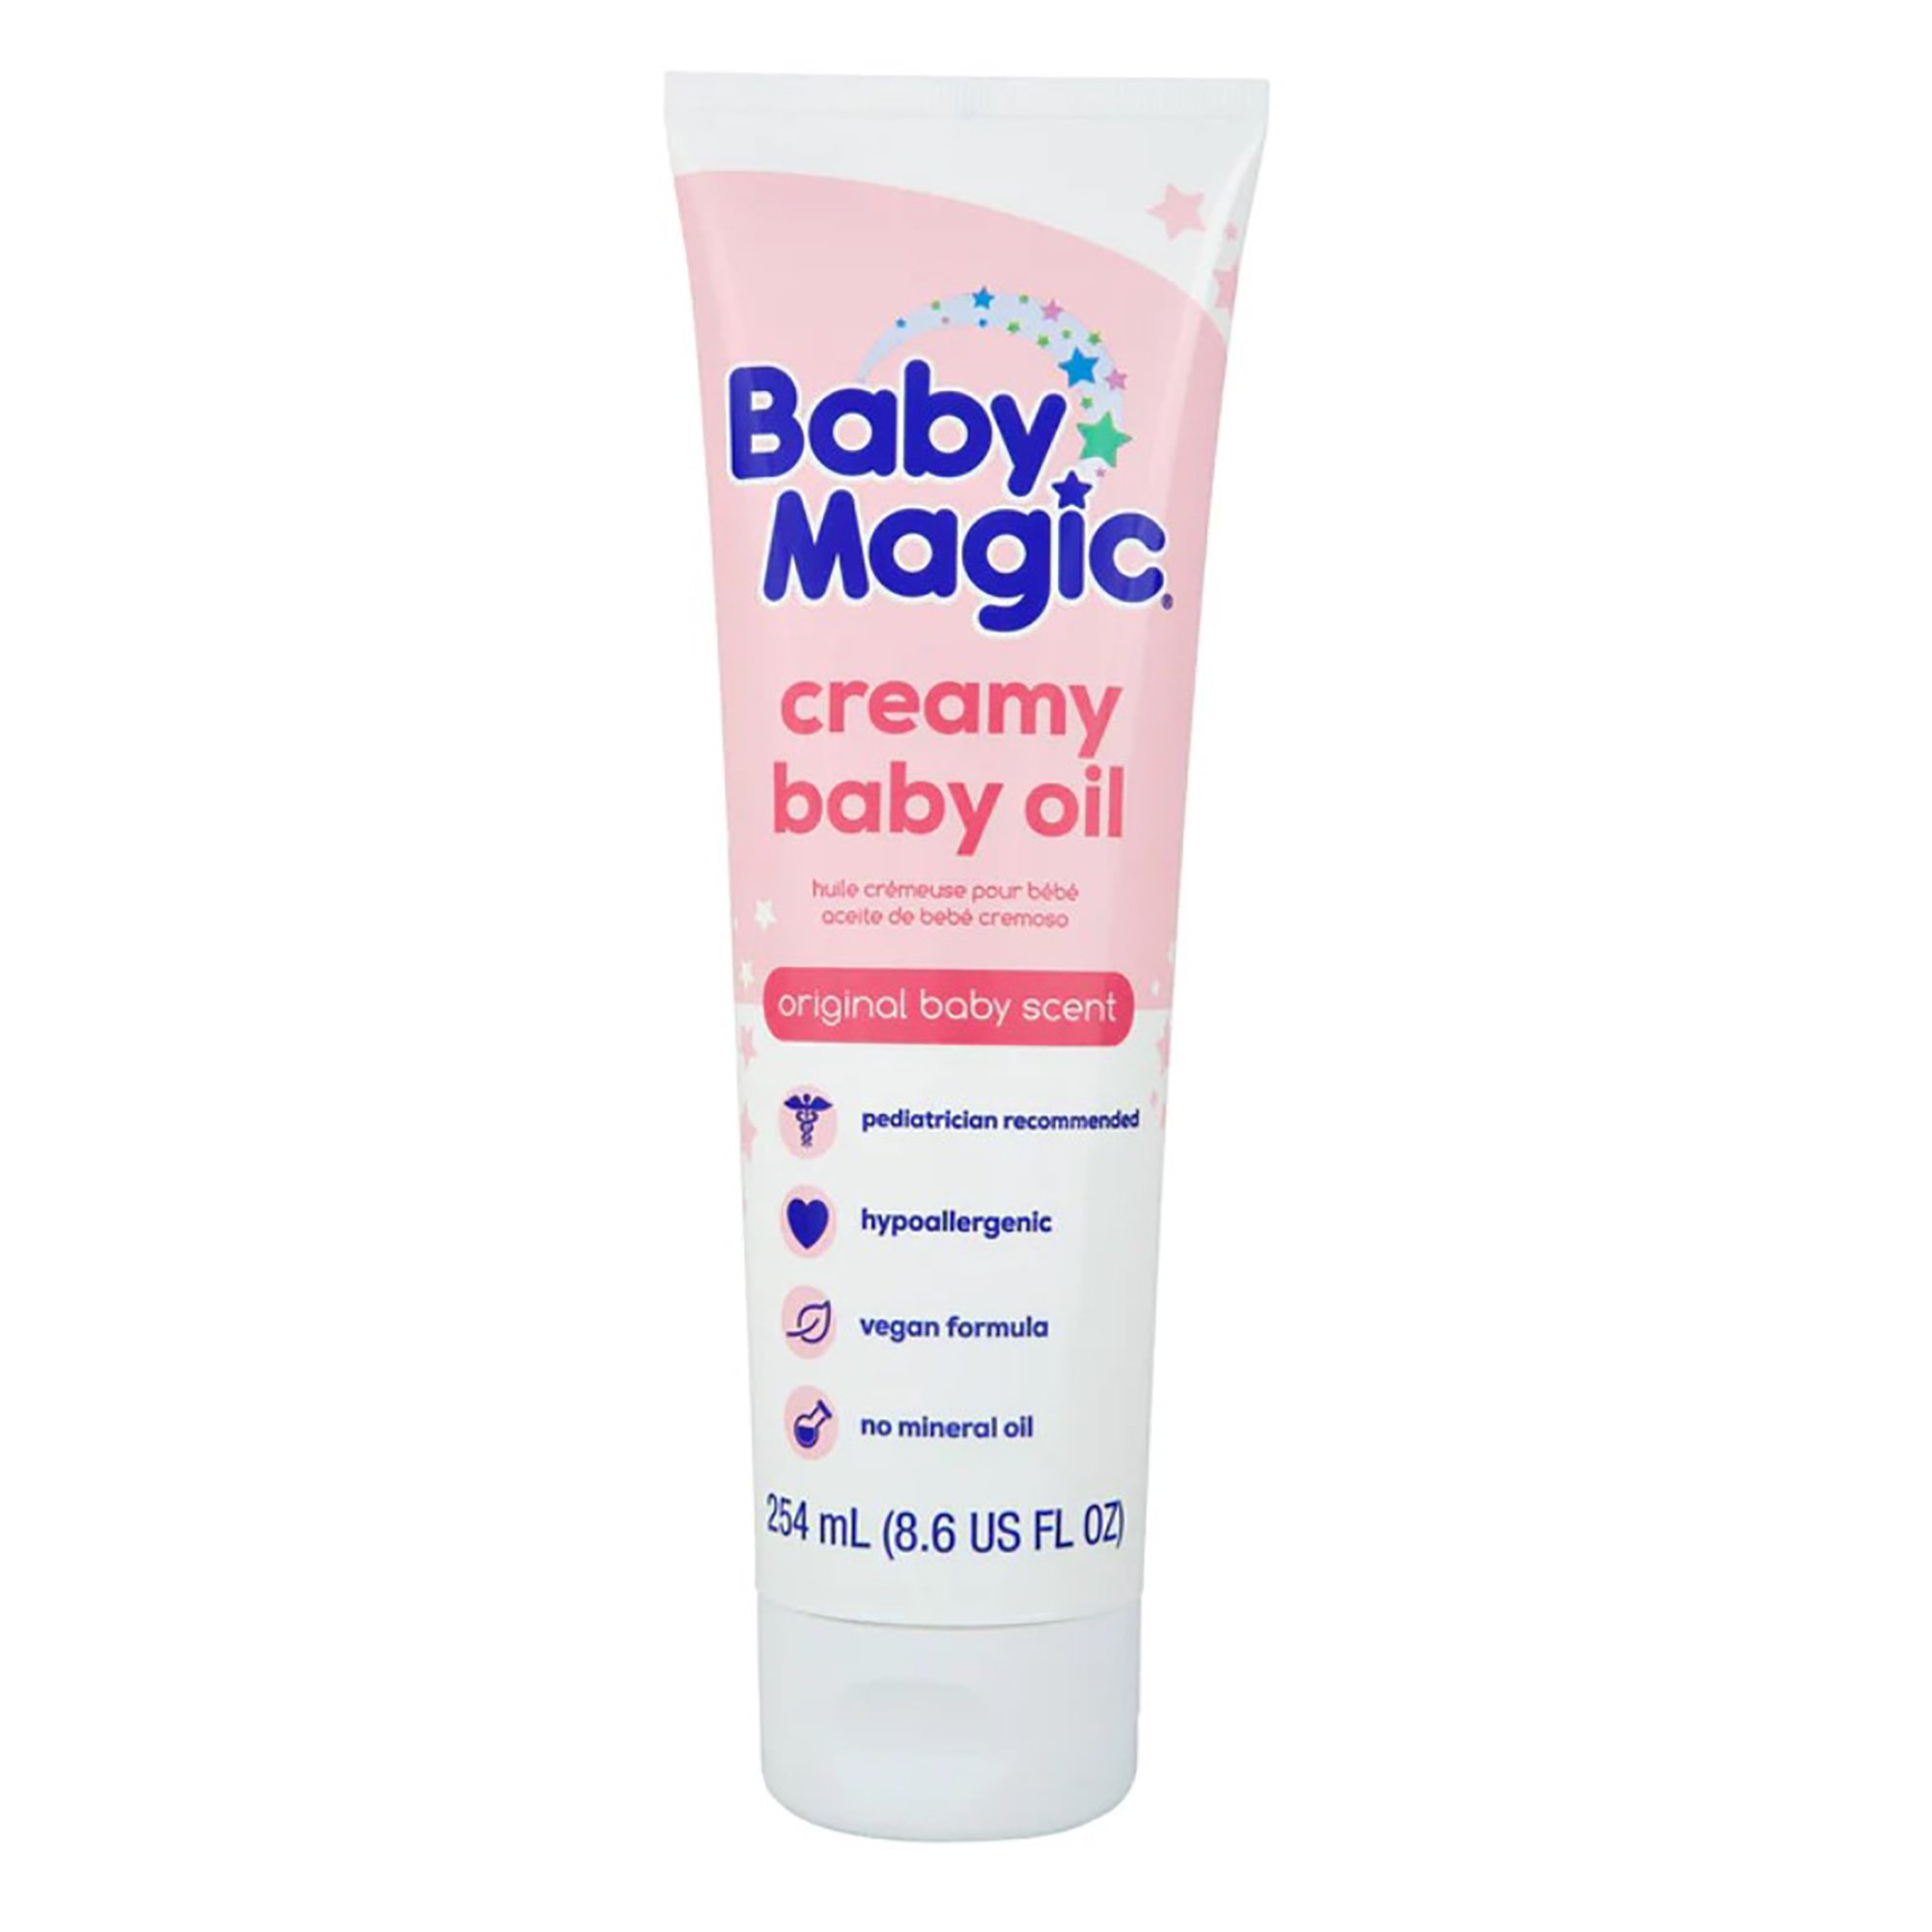 Baby Magic Creamy Baby Oil - Shop Lotion & Powder at H-E-B